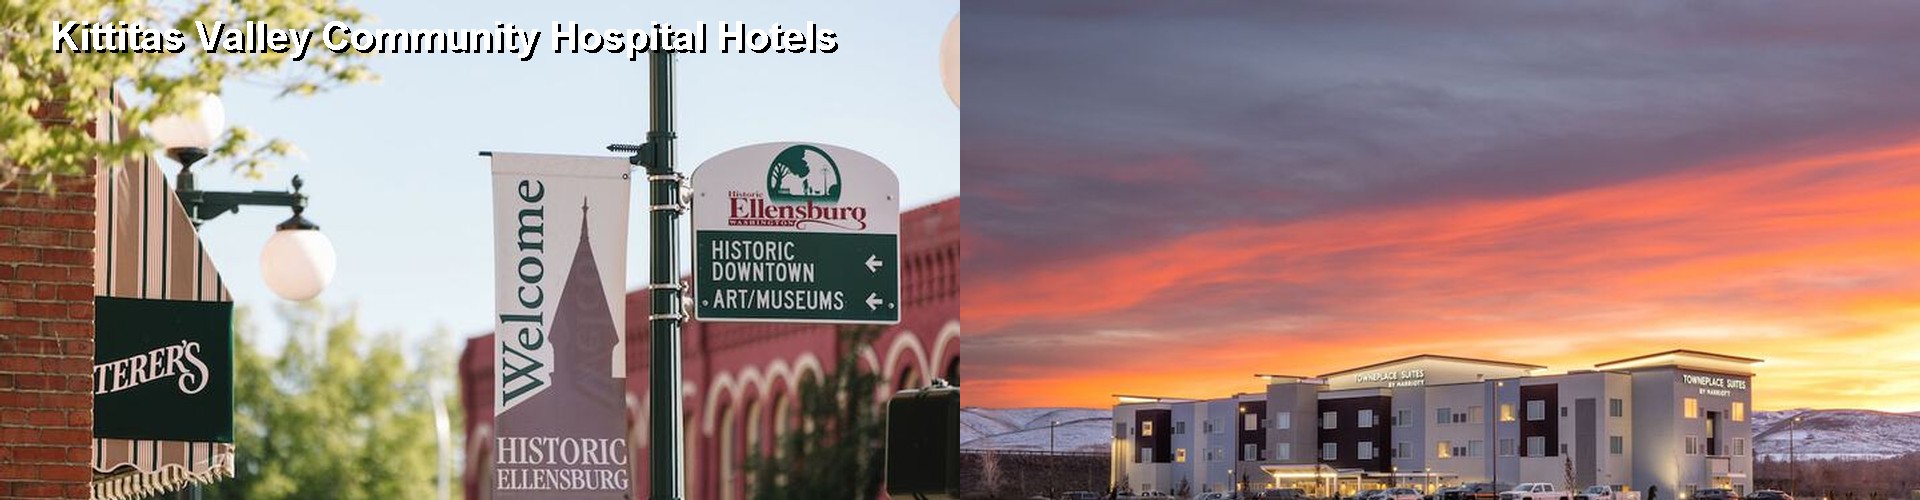 5 Best Hotels near Kittitas Valley Community Hospital